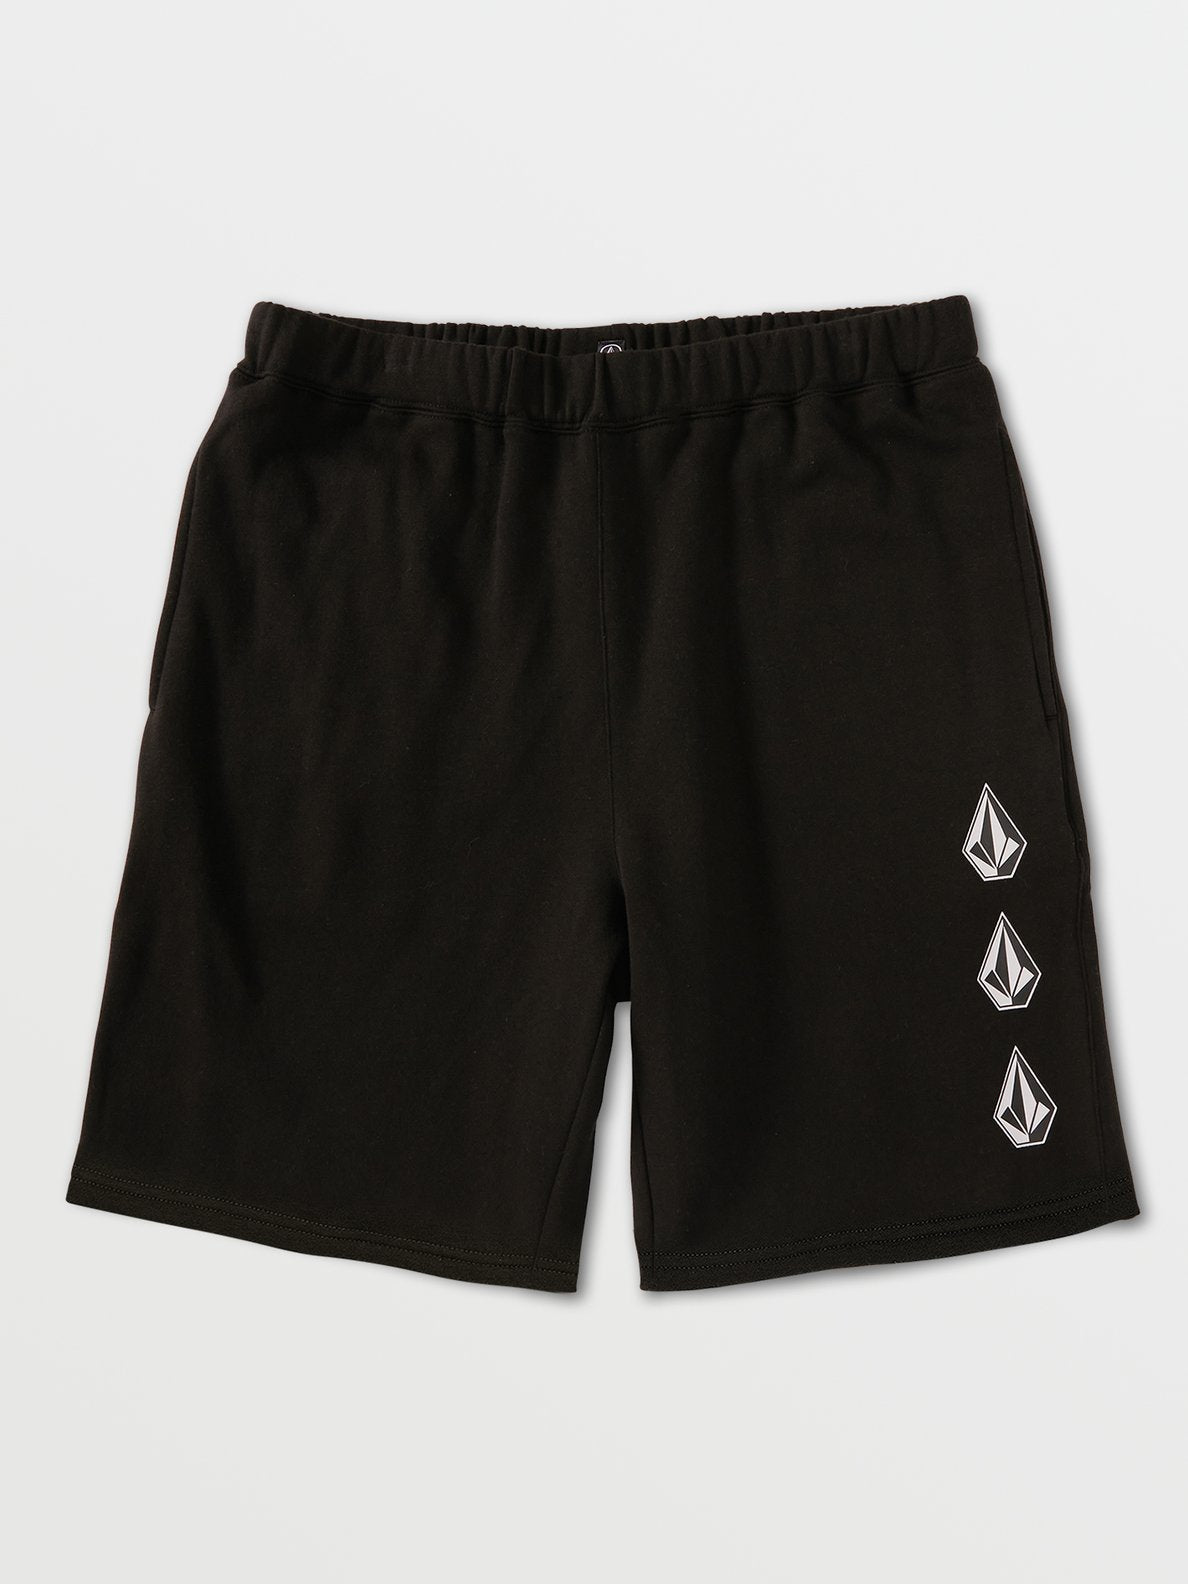 Volcom Iconic Stone Fleece Shorts - Black / Multi Mens Shorts Black